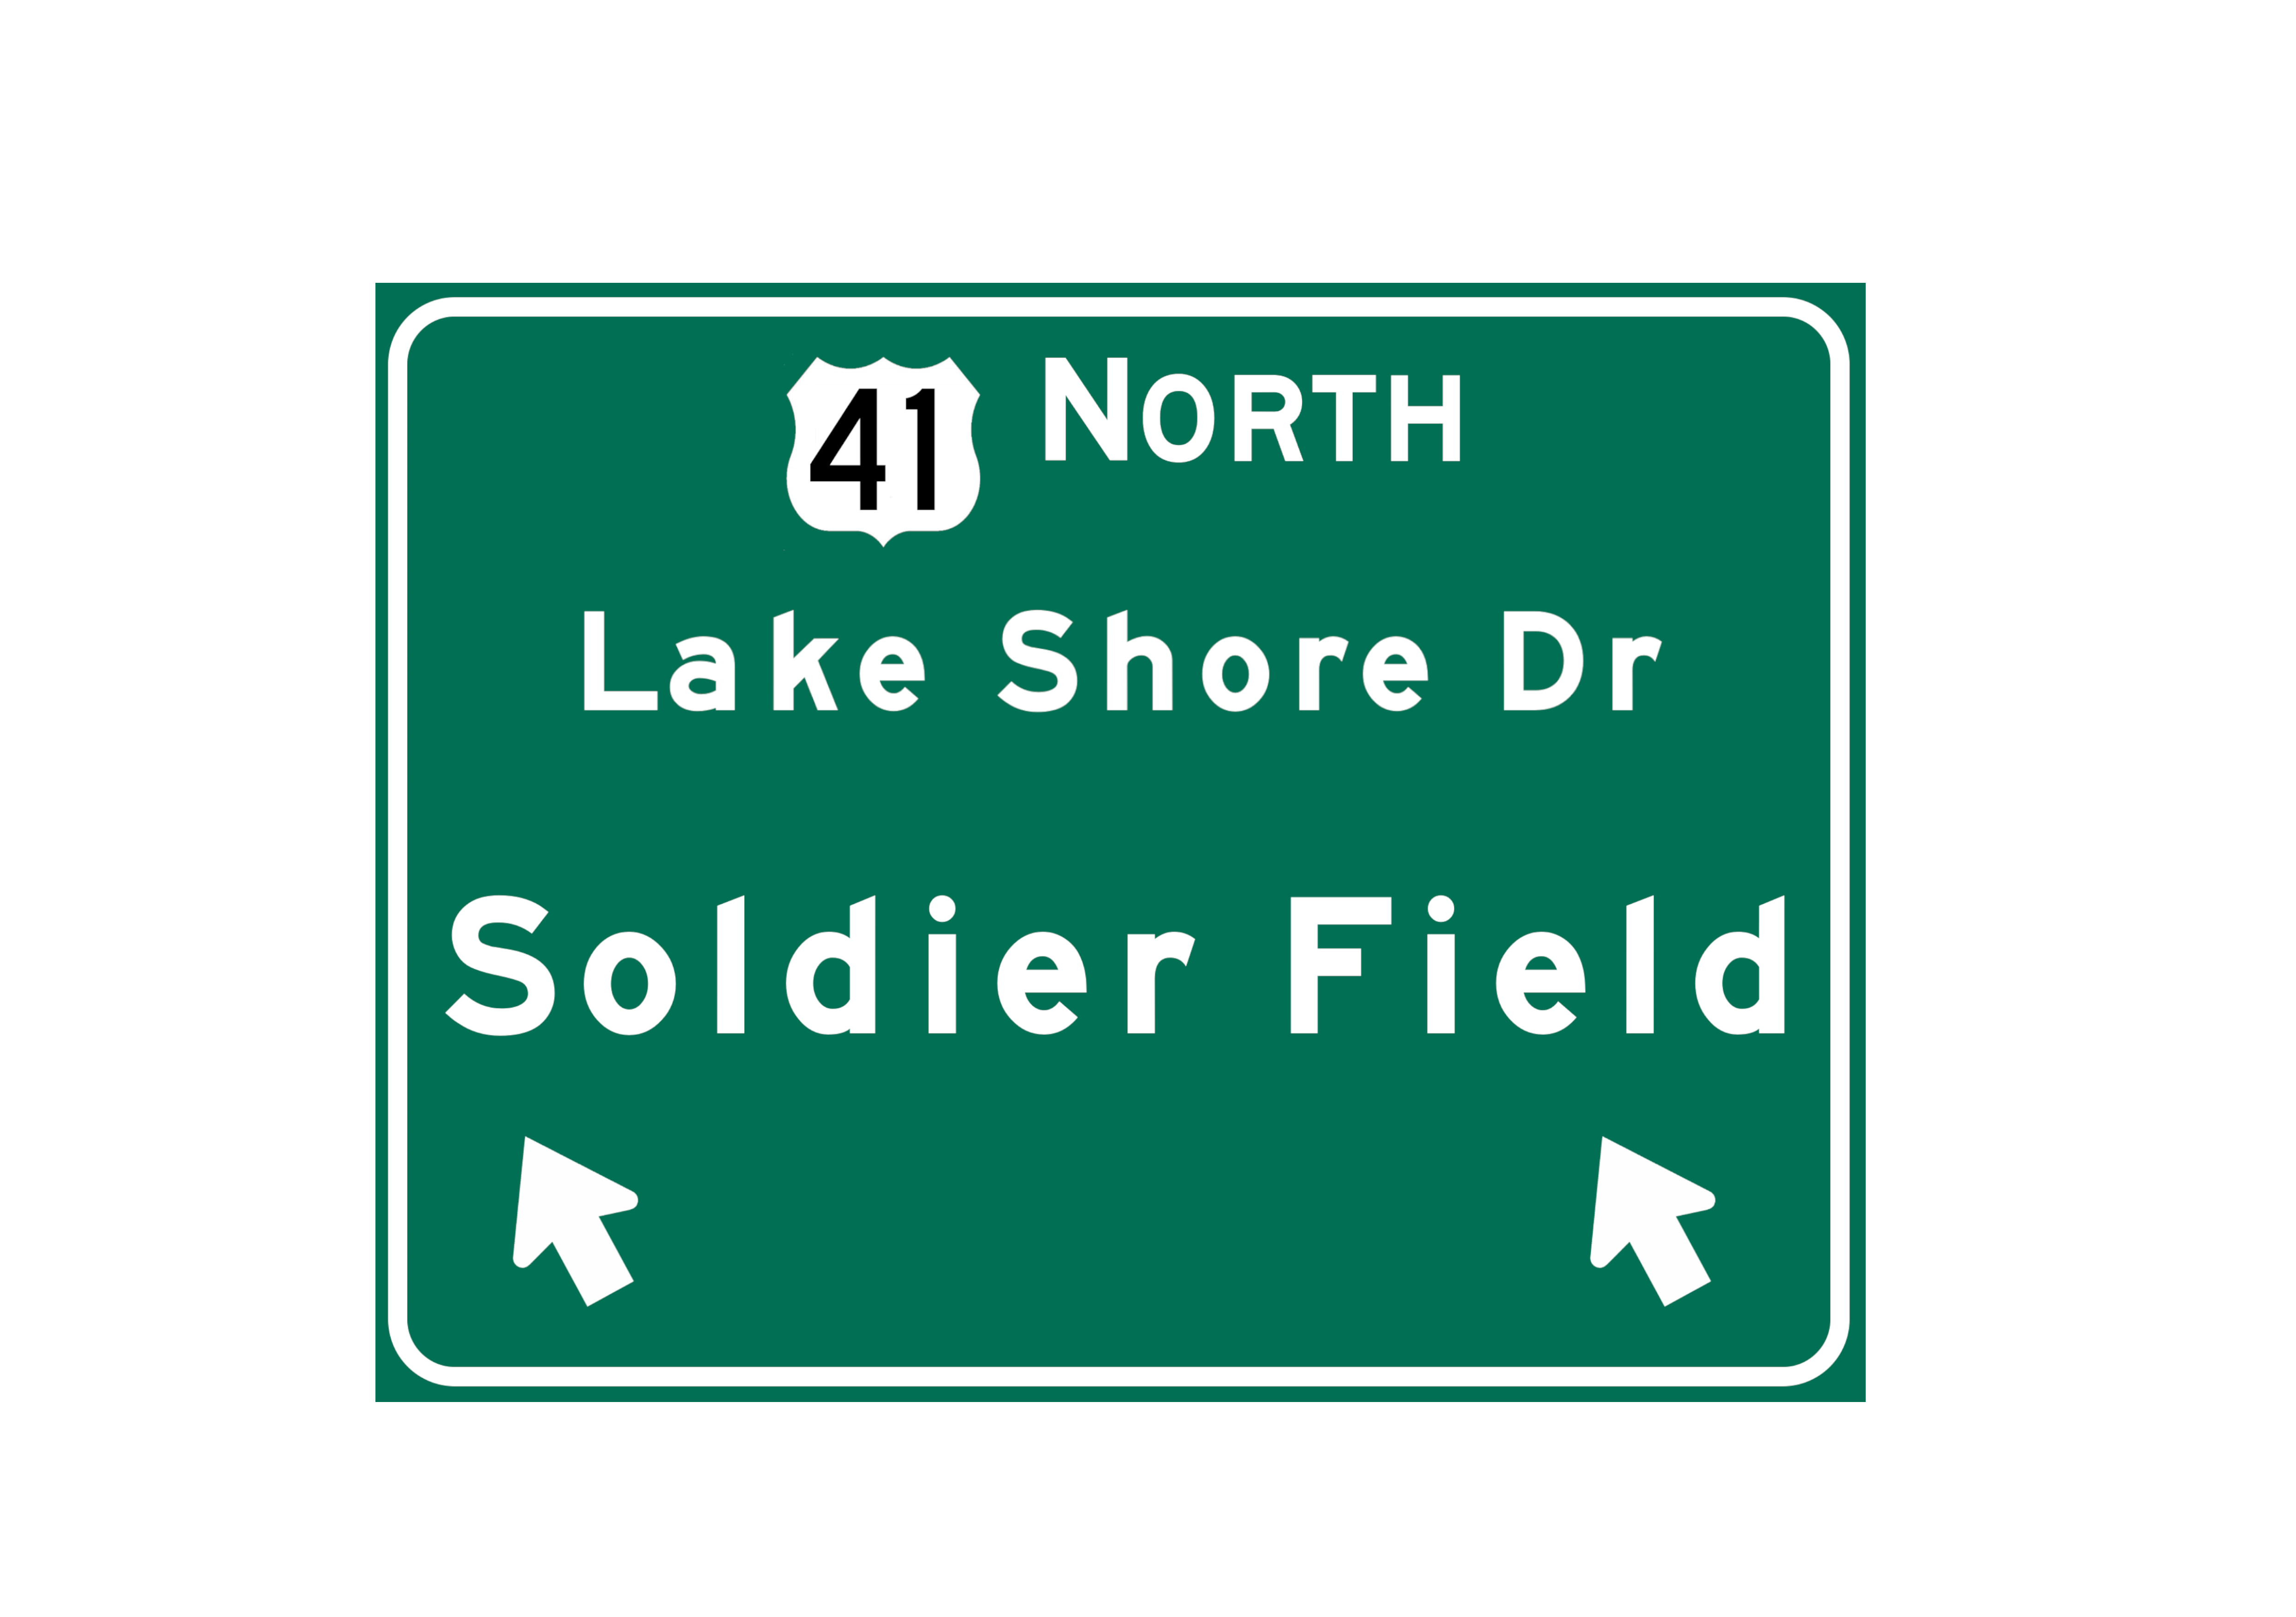 Soldier Field – Classic Stadium Metal Sign